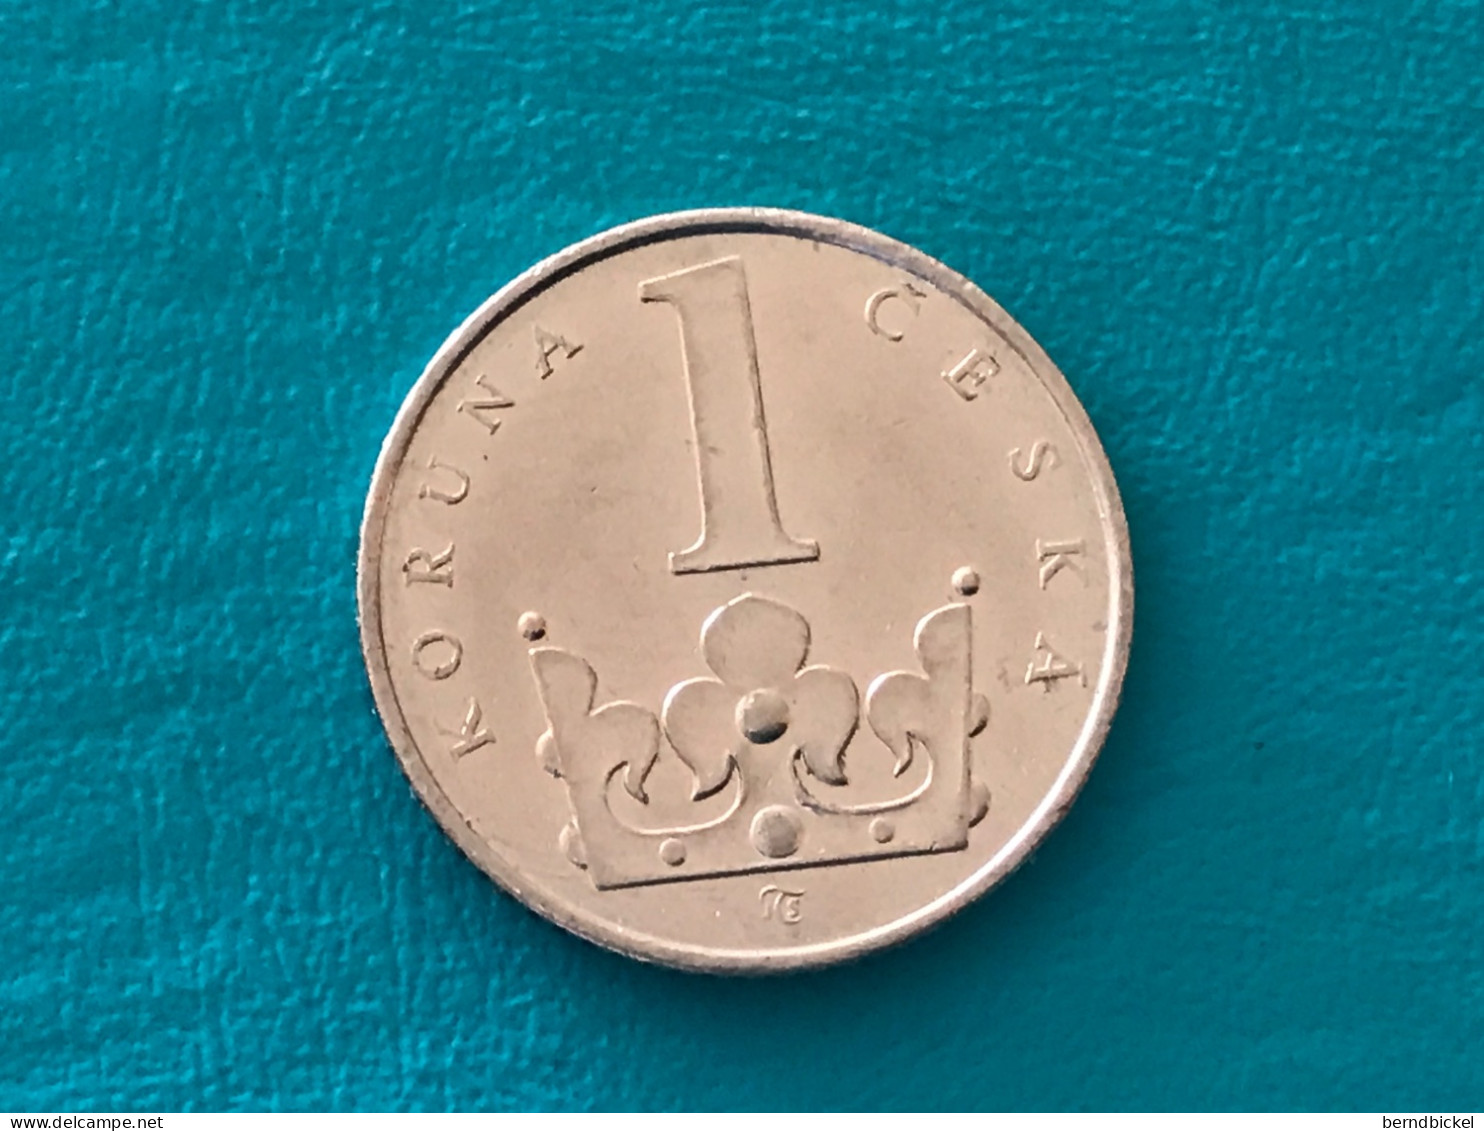 Münze Münzen Umlaufmünze Tschechien 1 Koruna 1995 - Czech Republic